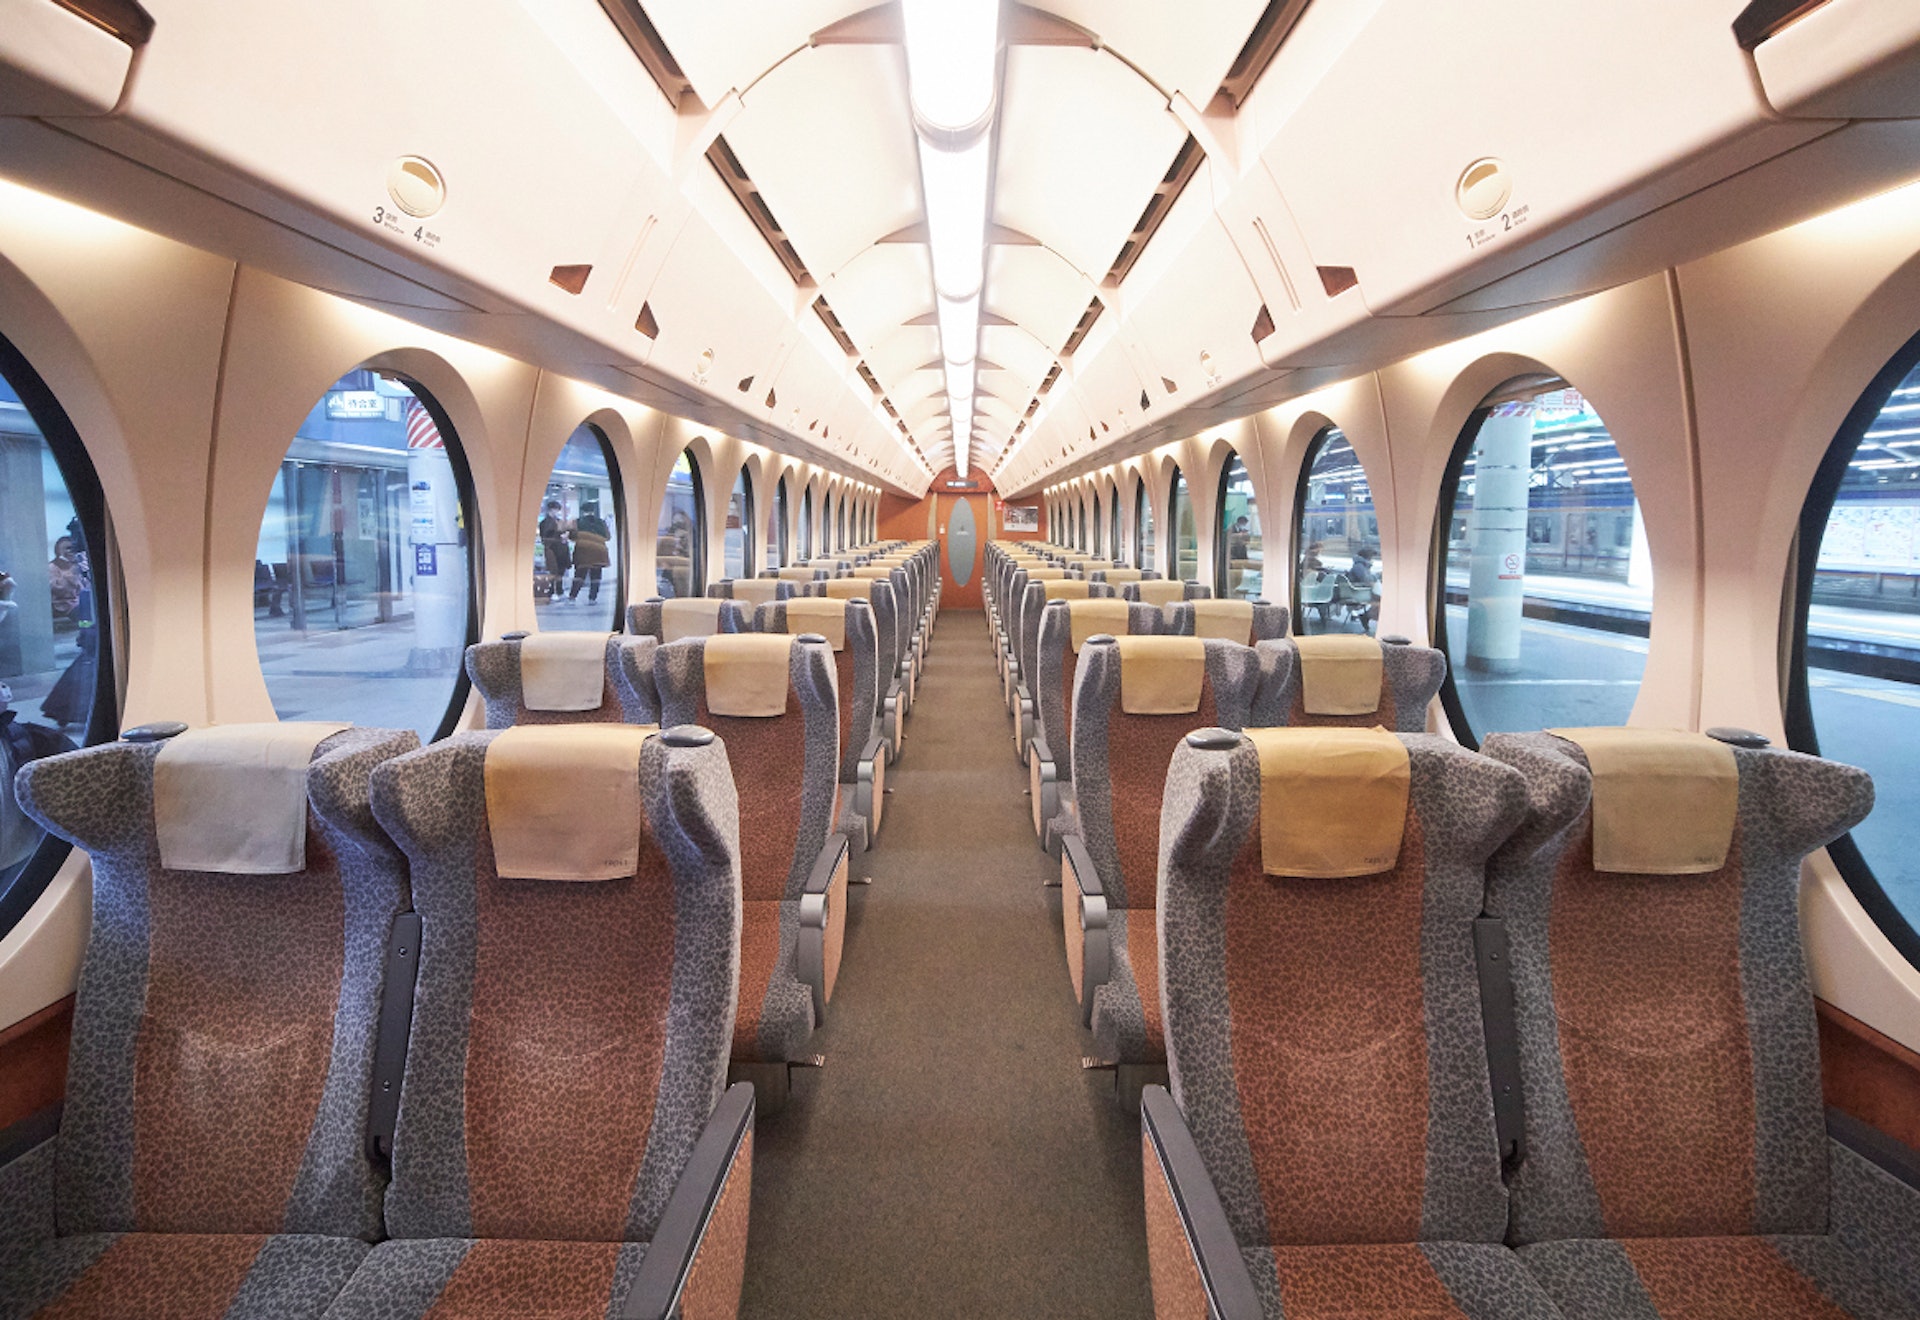 「Rapi:t」特急列車的室內設計相當豪華（圖片來源：南海電氣鐵道株式會社）